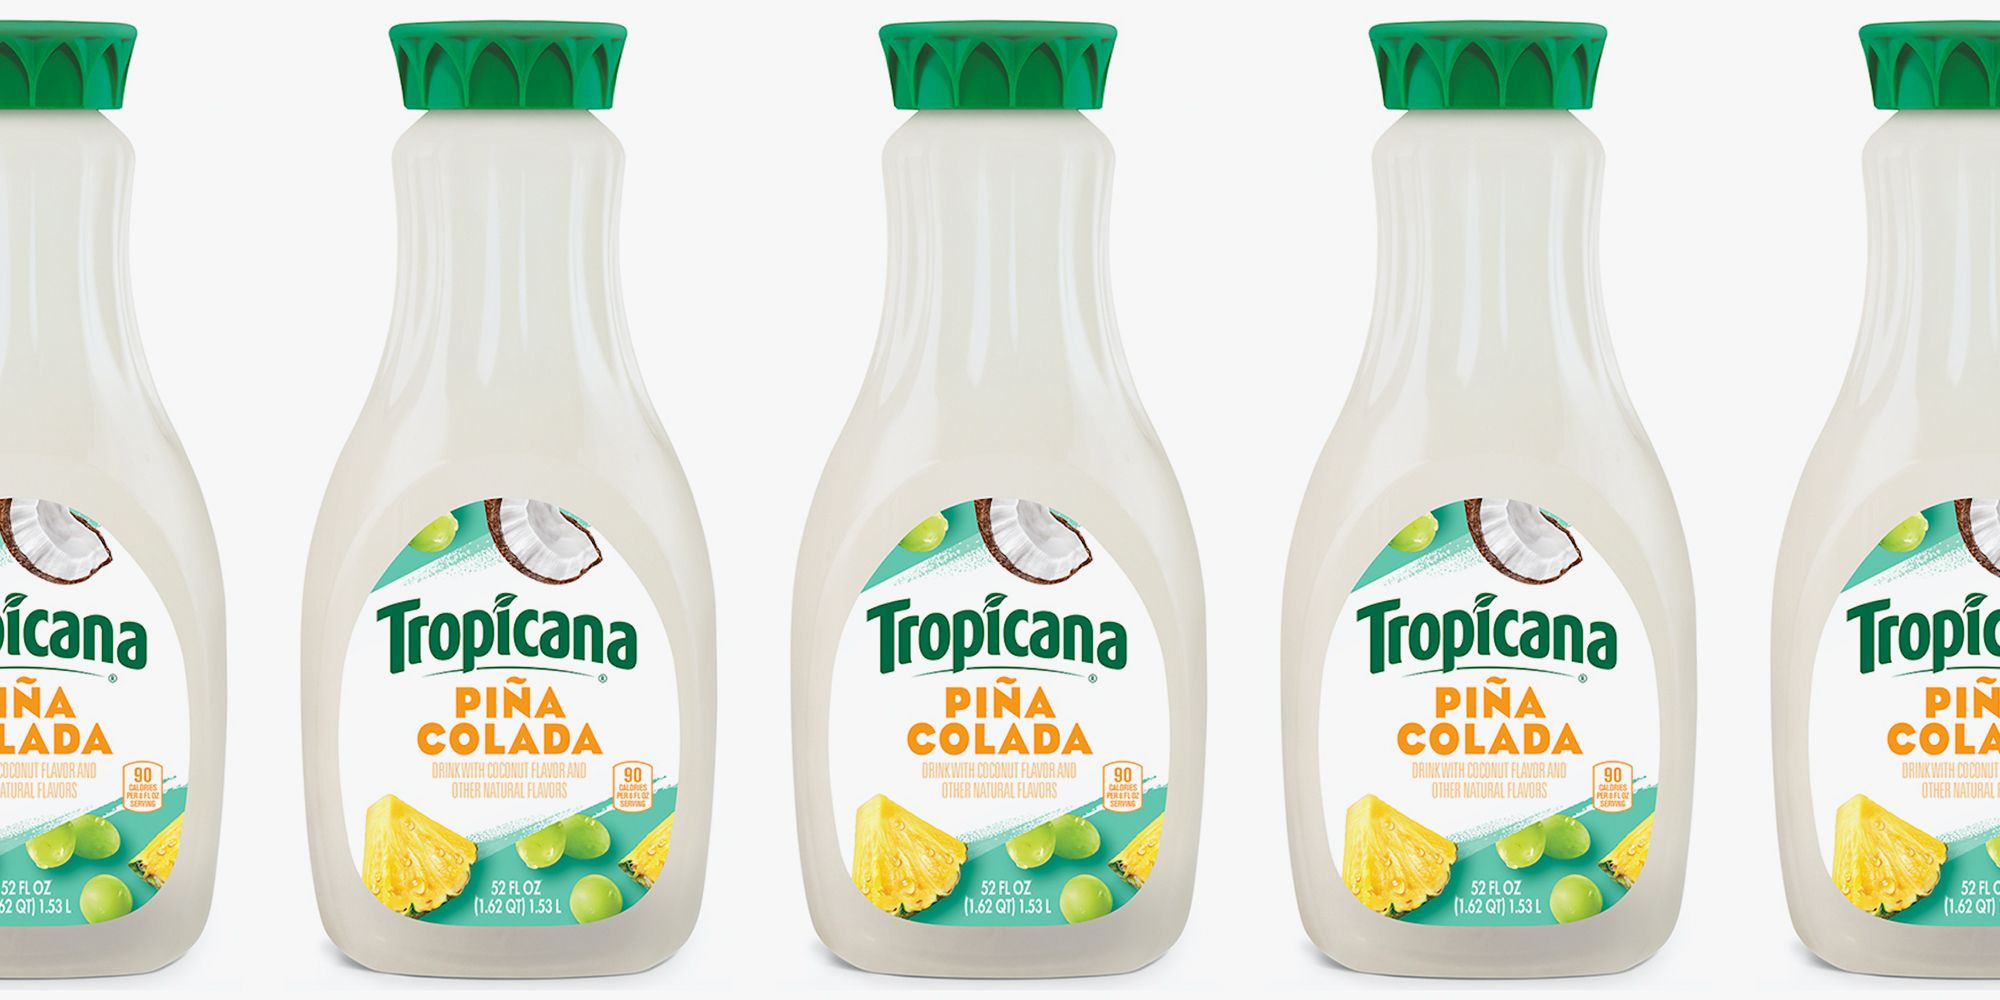 Tropicana flavour